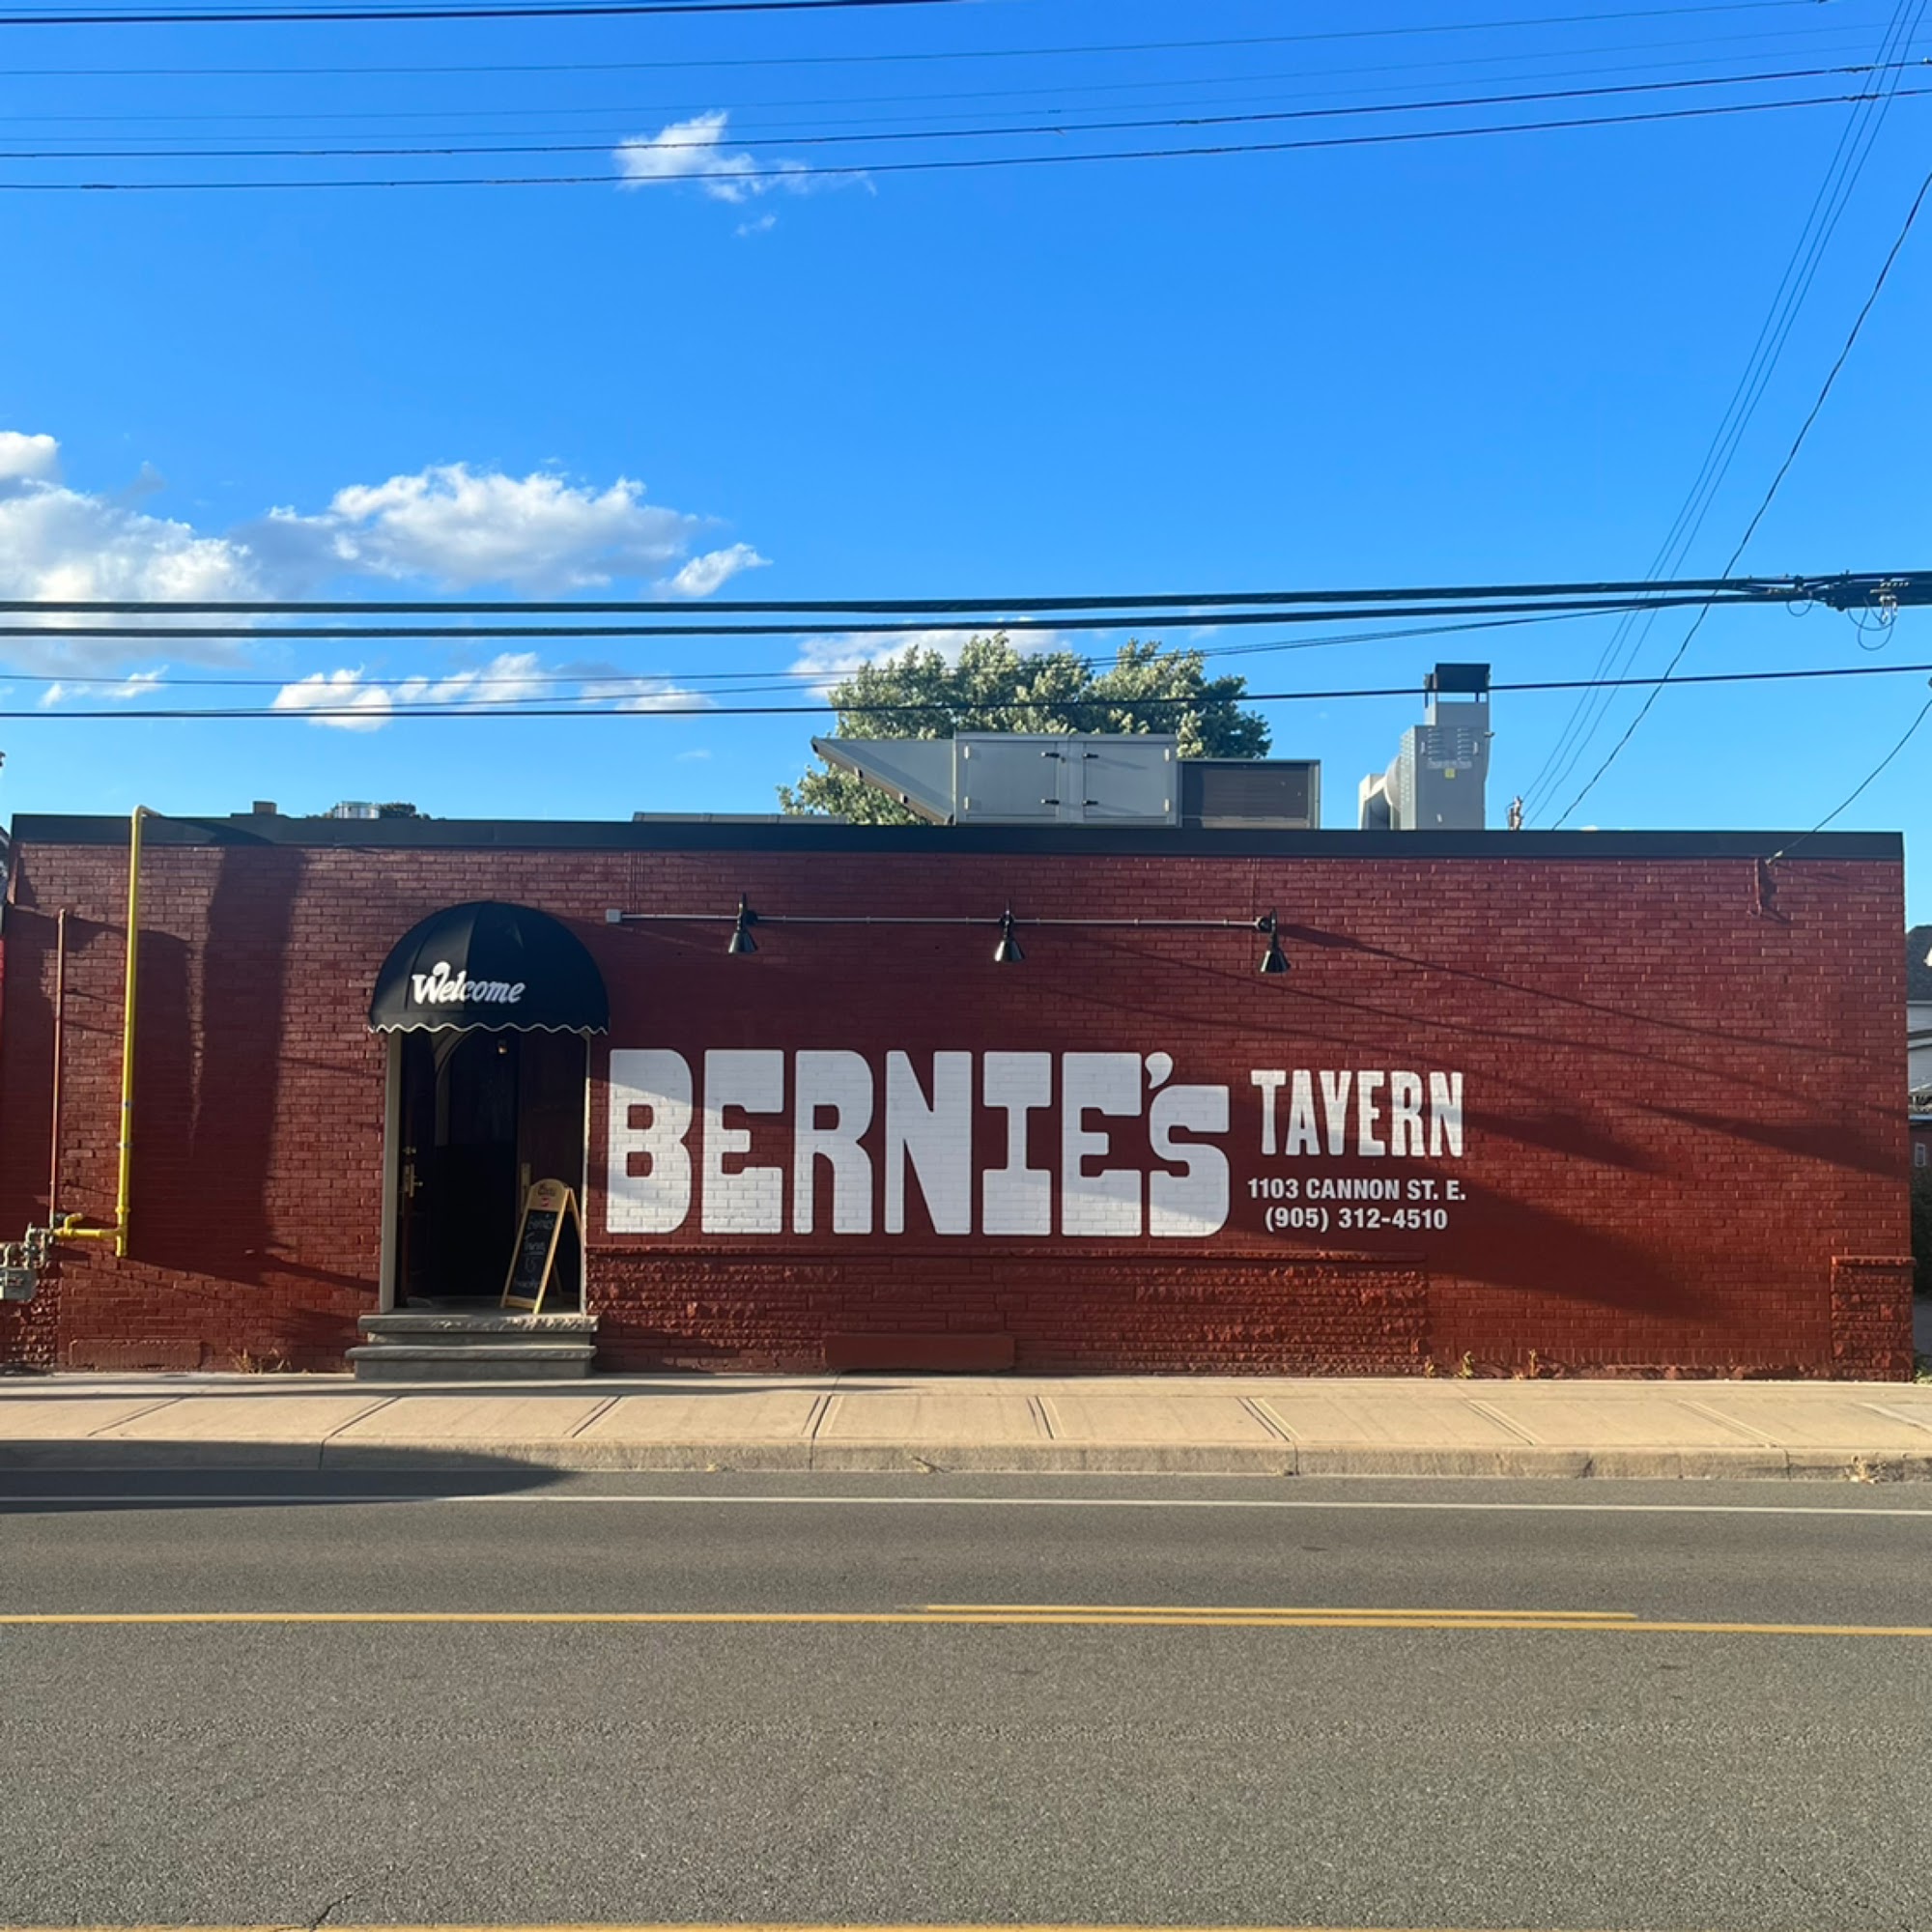 Bernie's Tavern